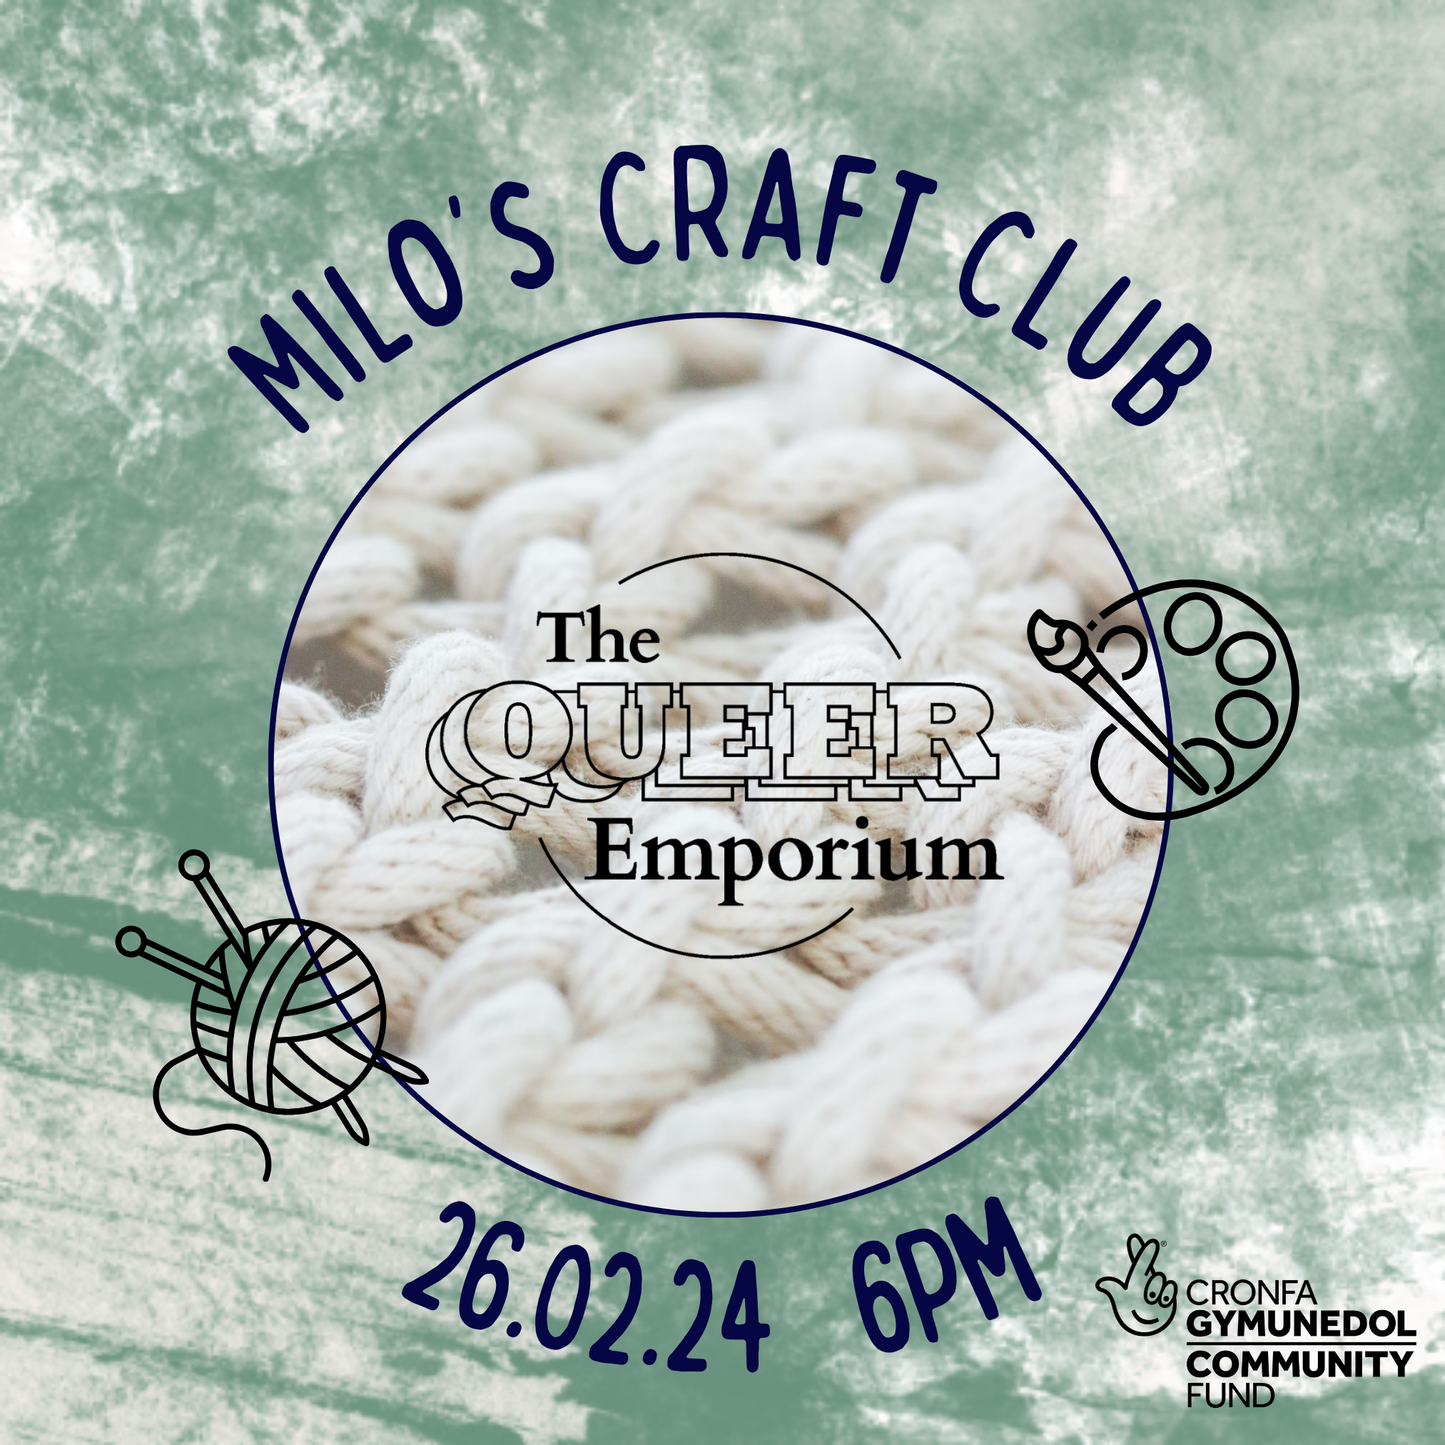 Milo's Craft Club